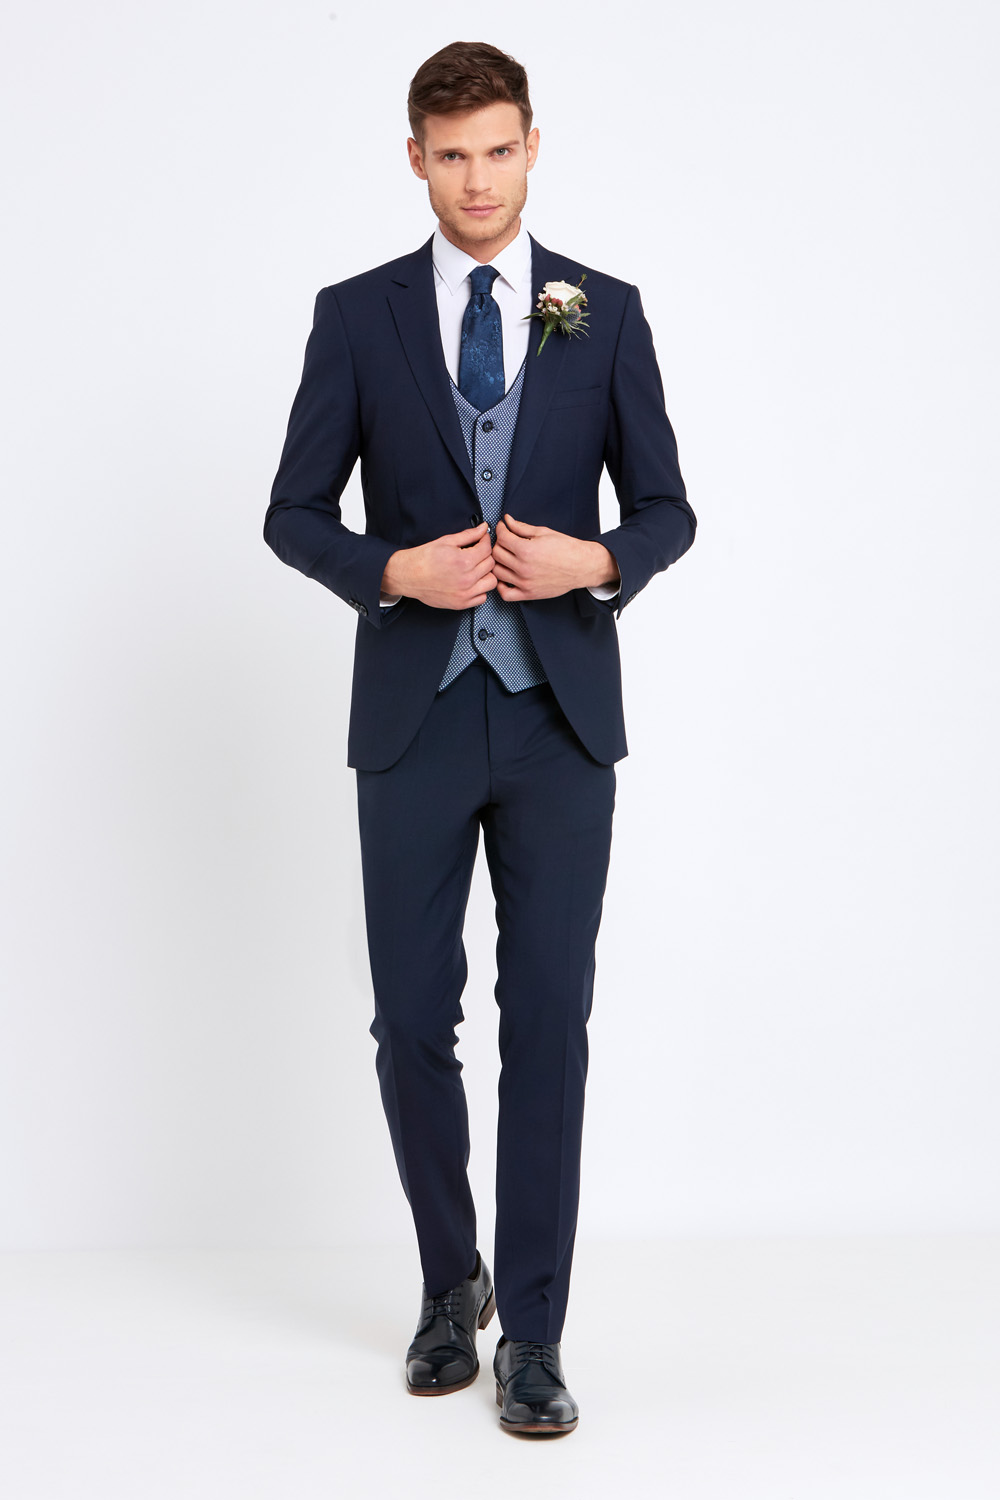 Alexander Navy 3 Piece Suit - Tom Murphy's Formal and Menswear